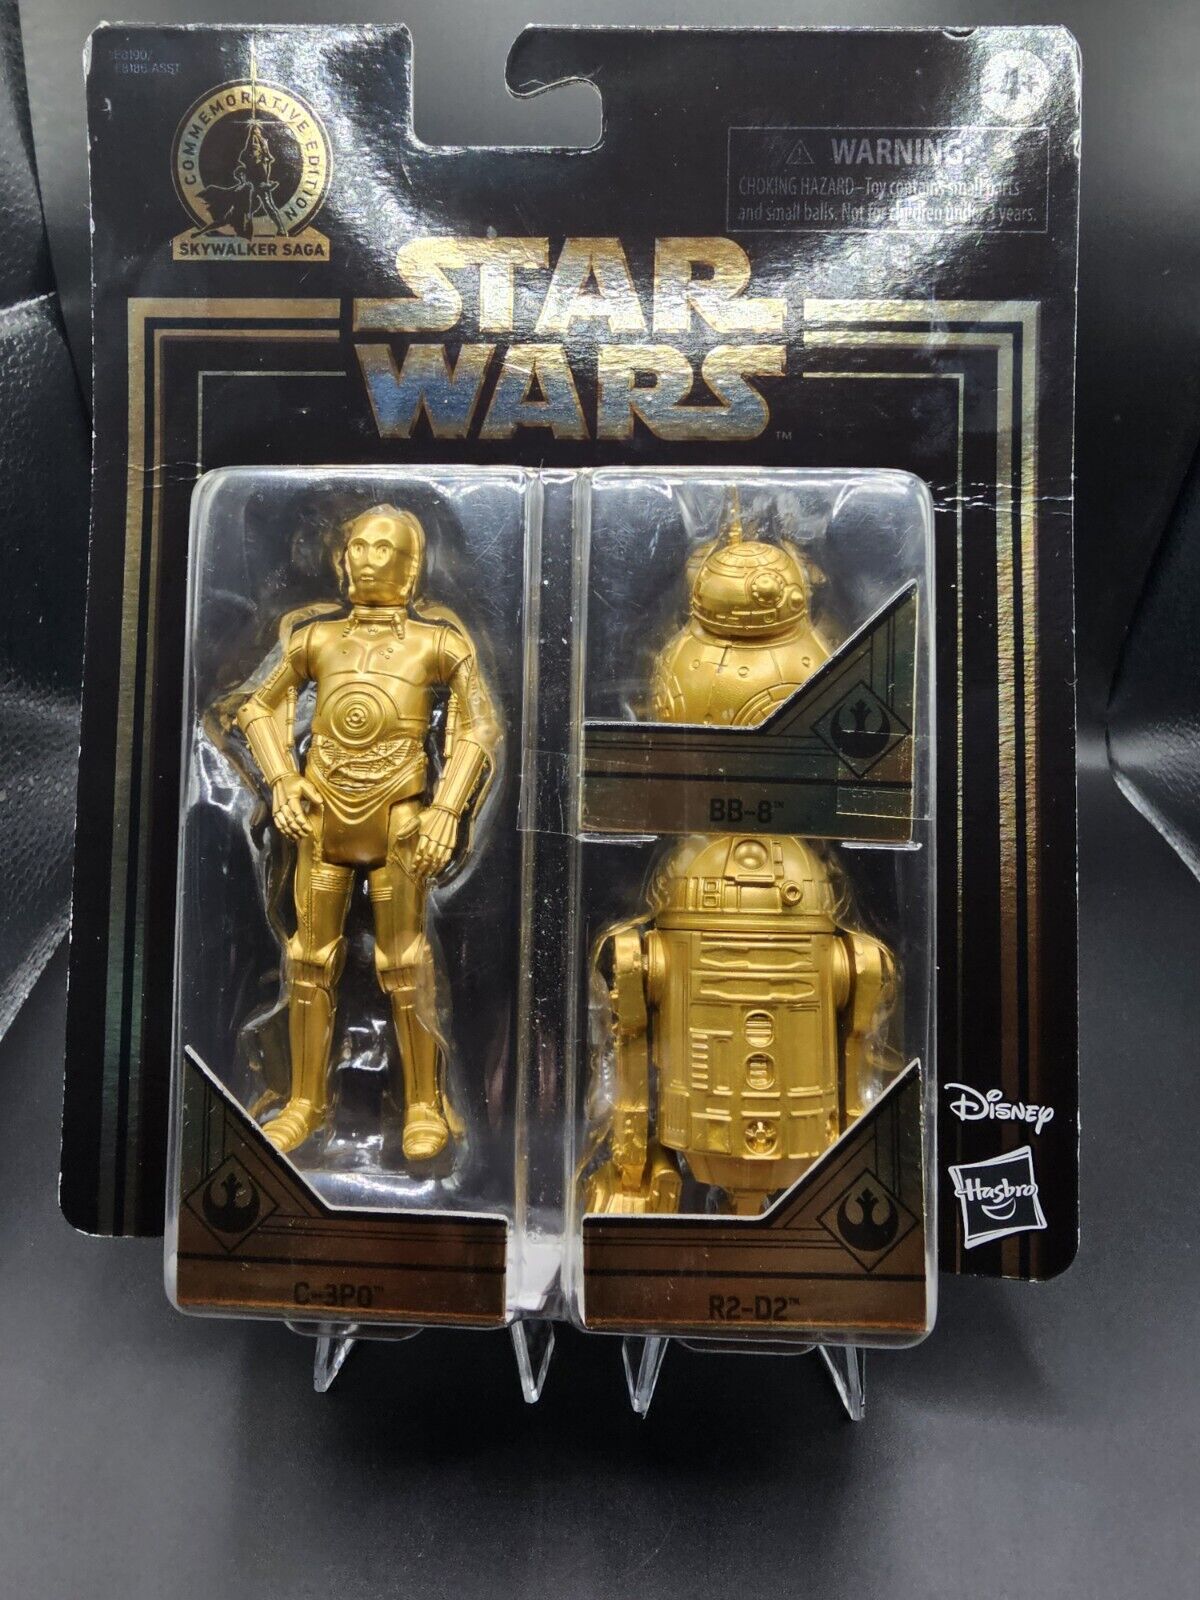 Star Wars Skywalker Saga Commemorative Edition Gold Collectors C-3PO R2-D2 BB-8